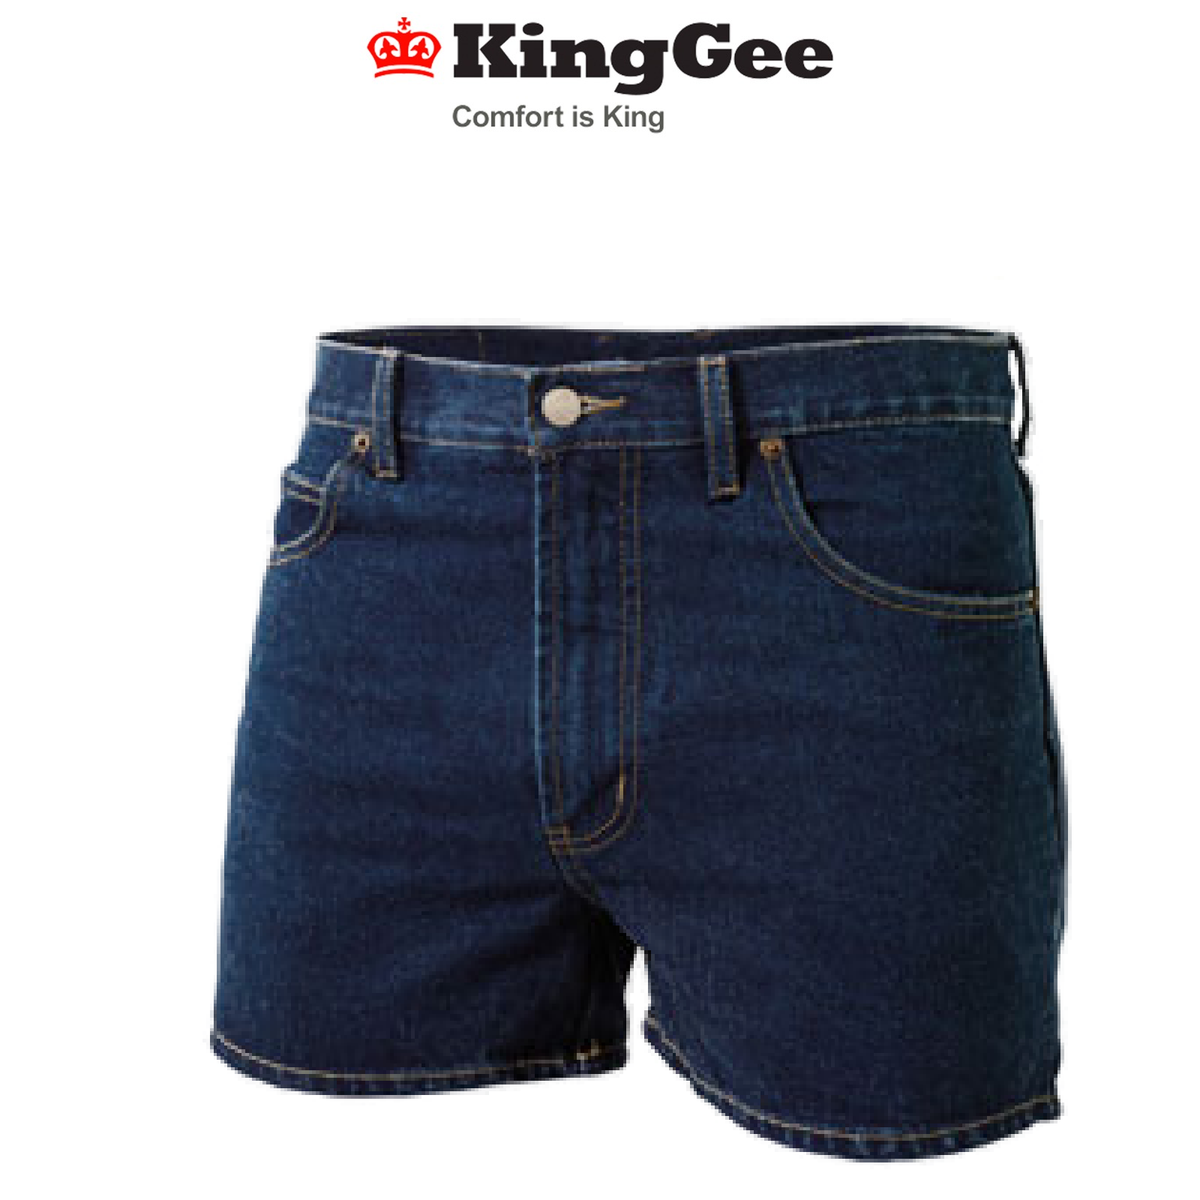 KingGee Womens Stretch Denim Work Short Classic Fit Comfortable Workwear K07020